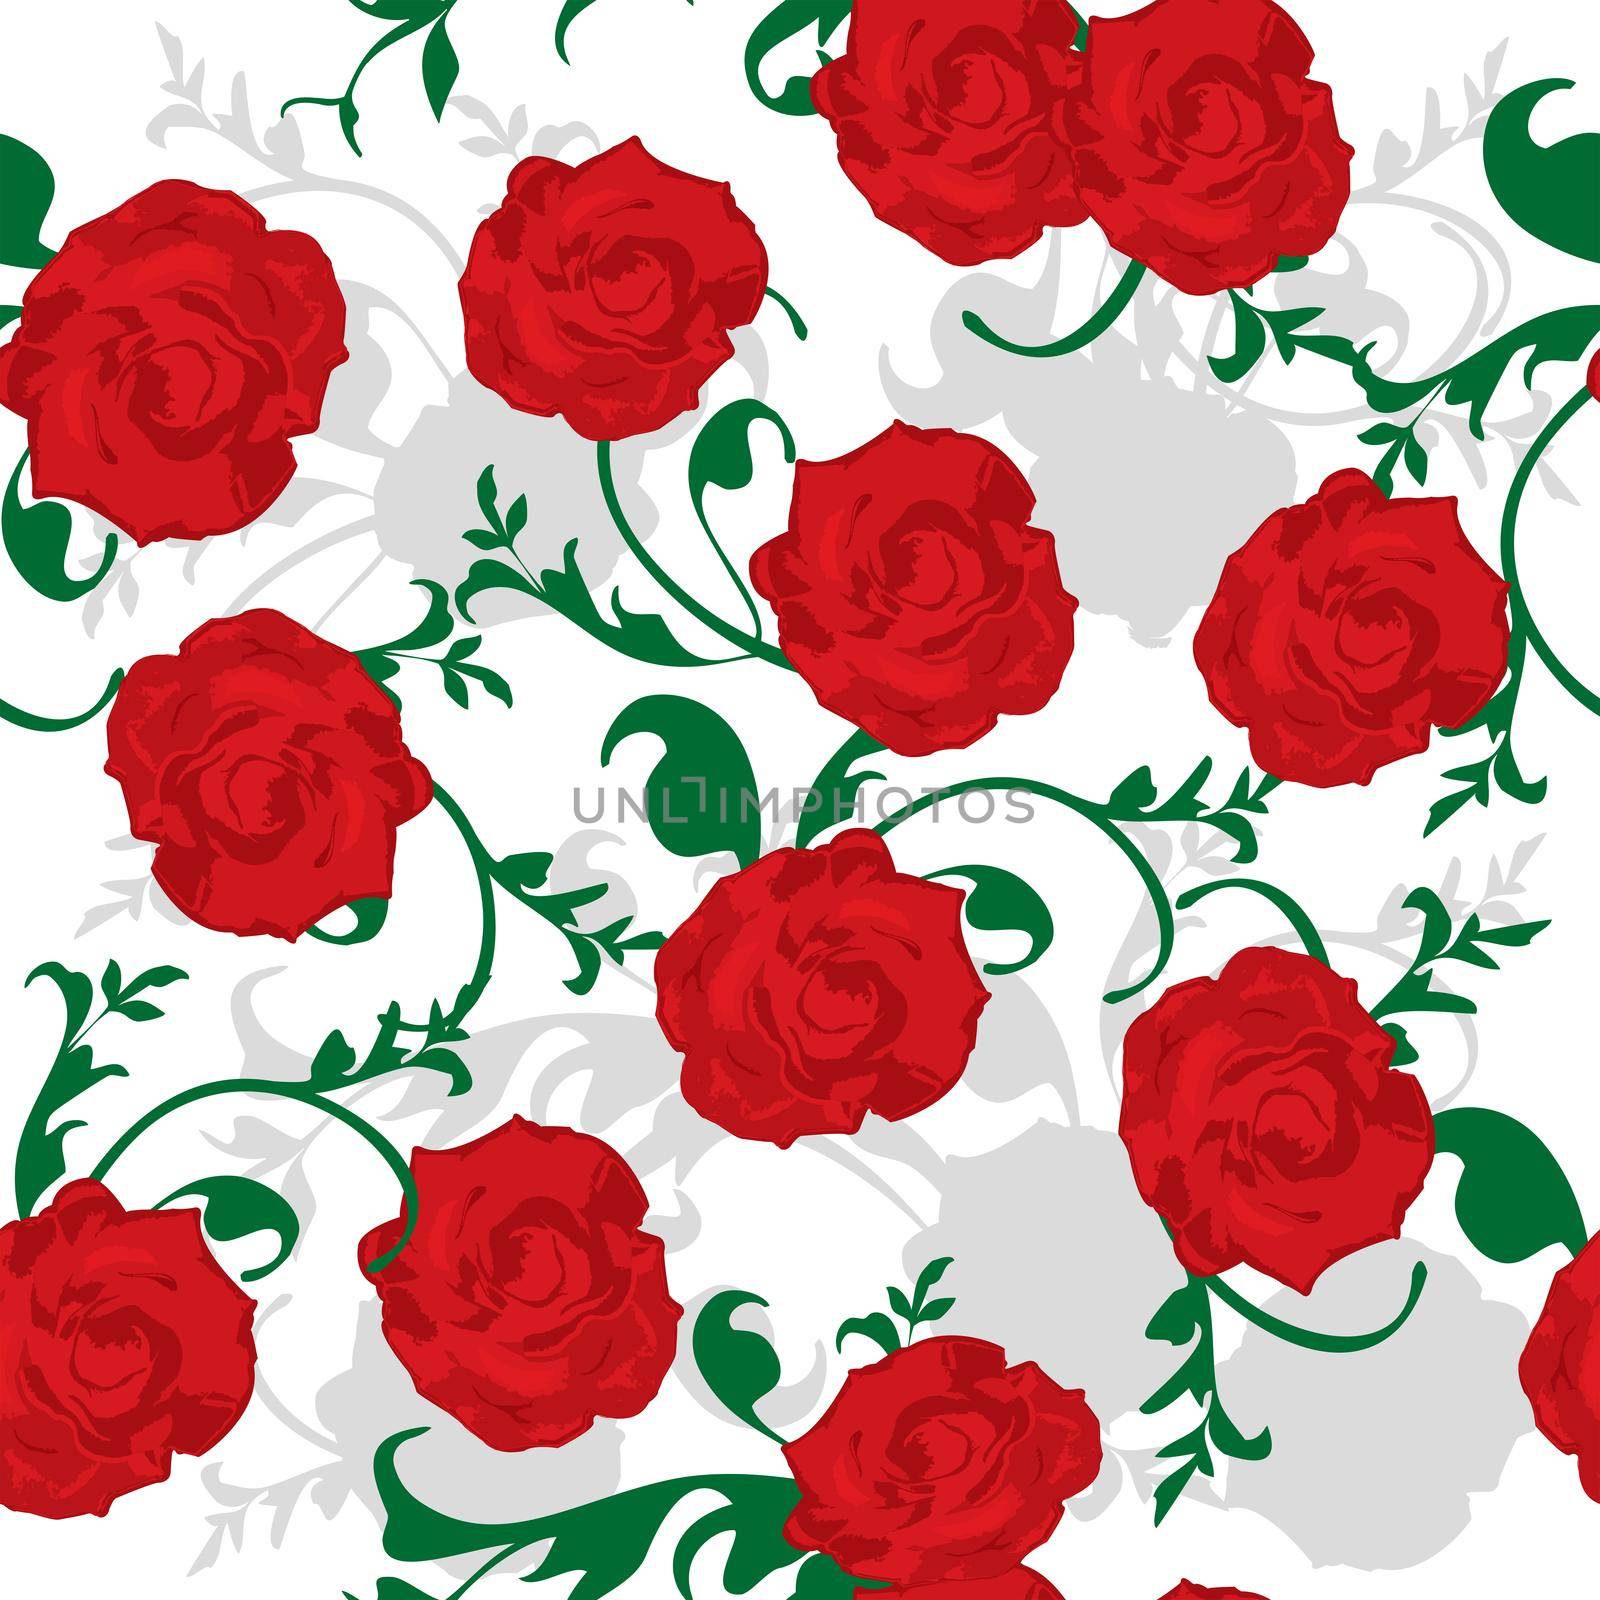 Seamless pattern with stylized rose and foliage by hibrida13